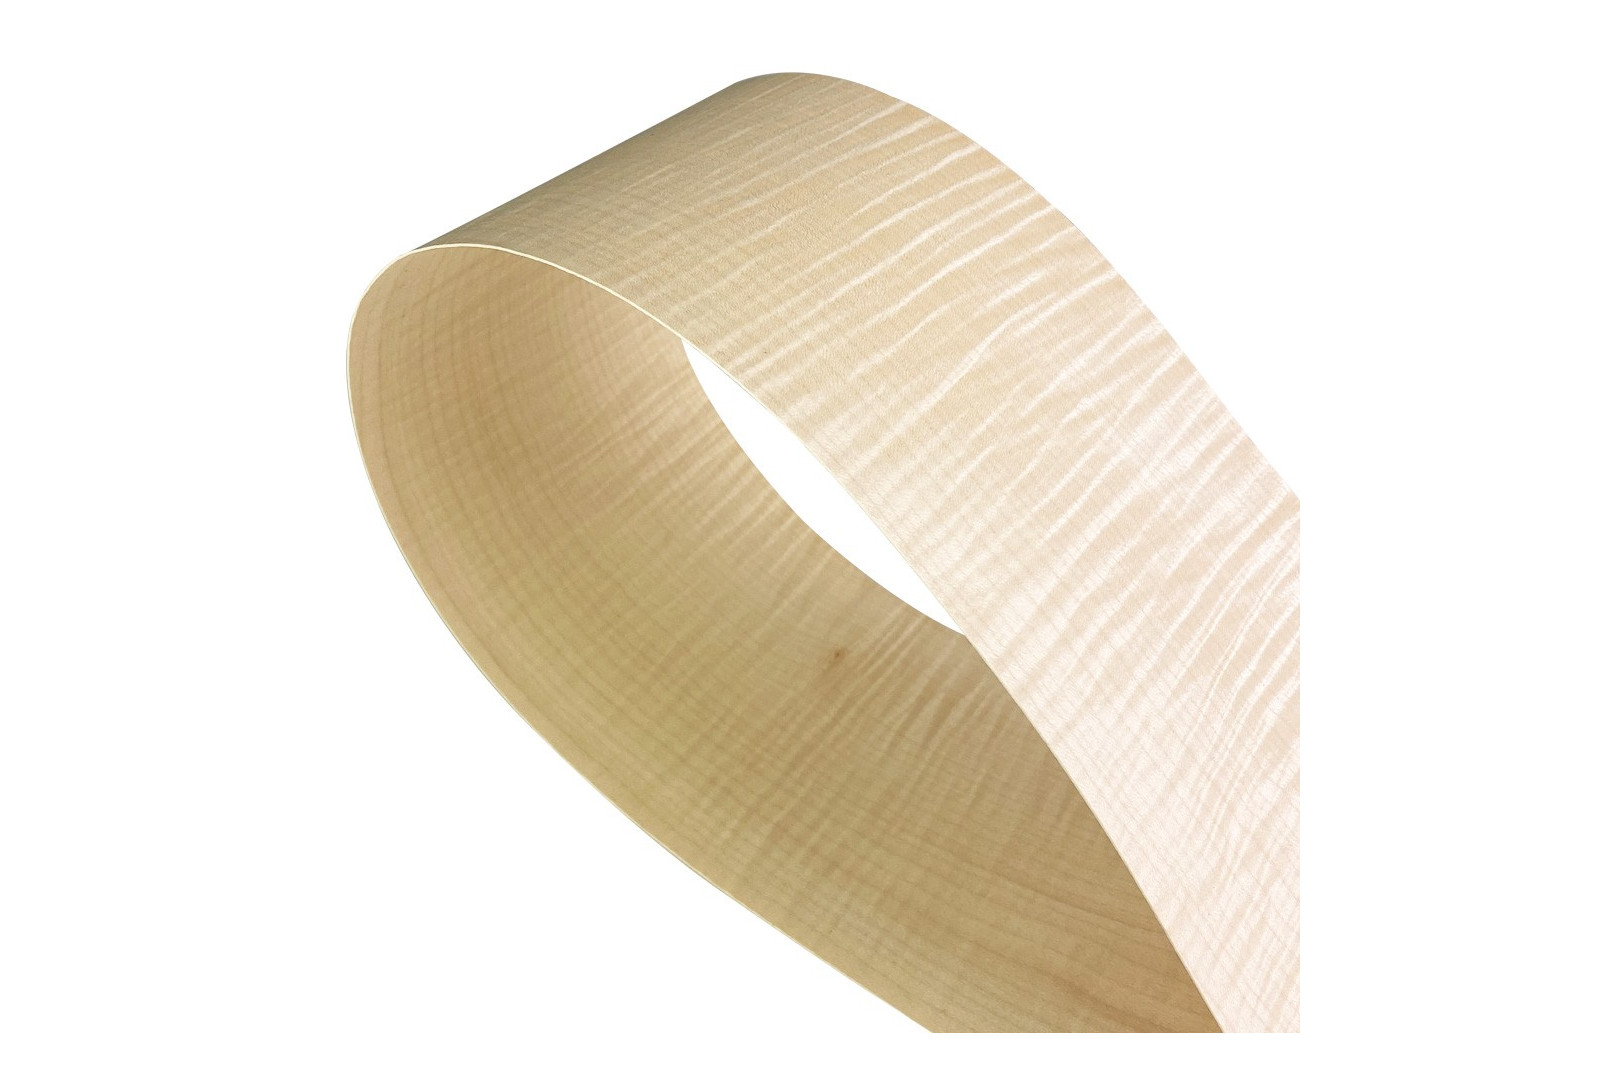 Chapa madera Quebook Arce 1 mm grosor 60 x 40 cm